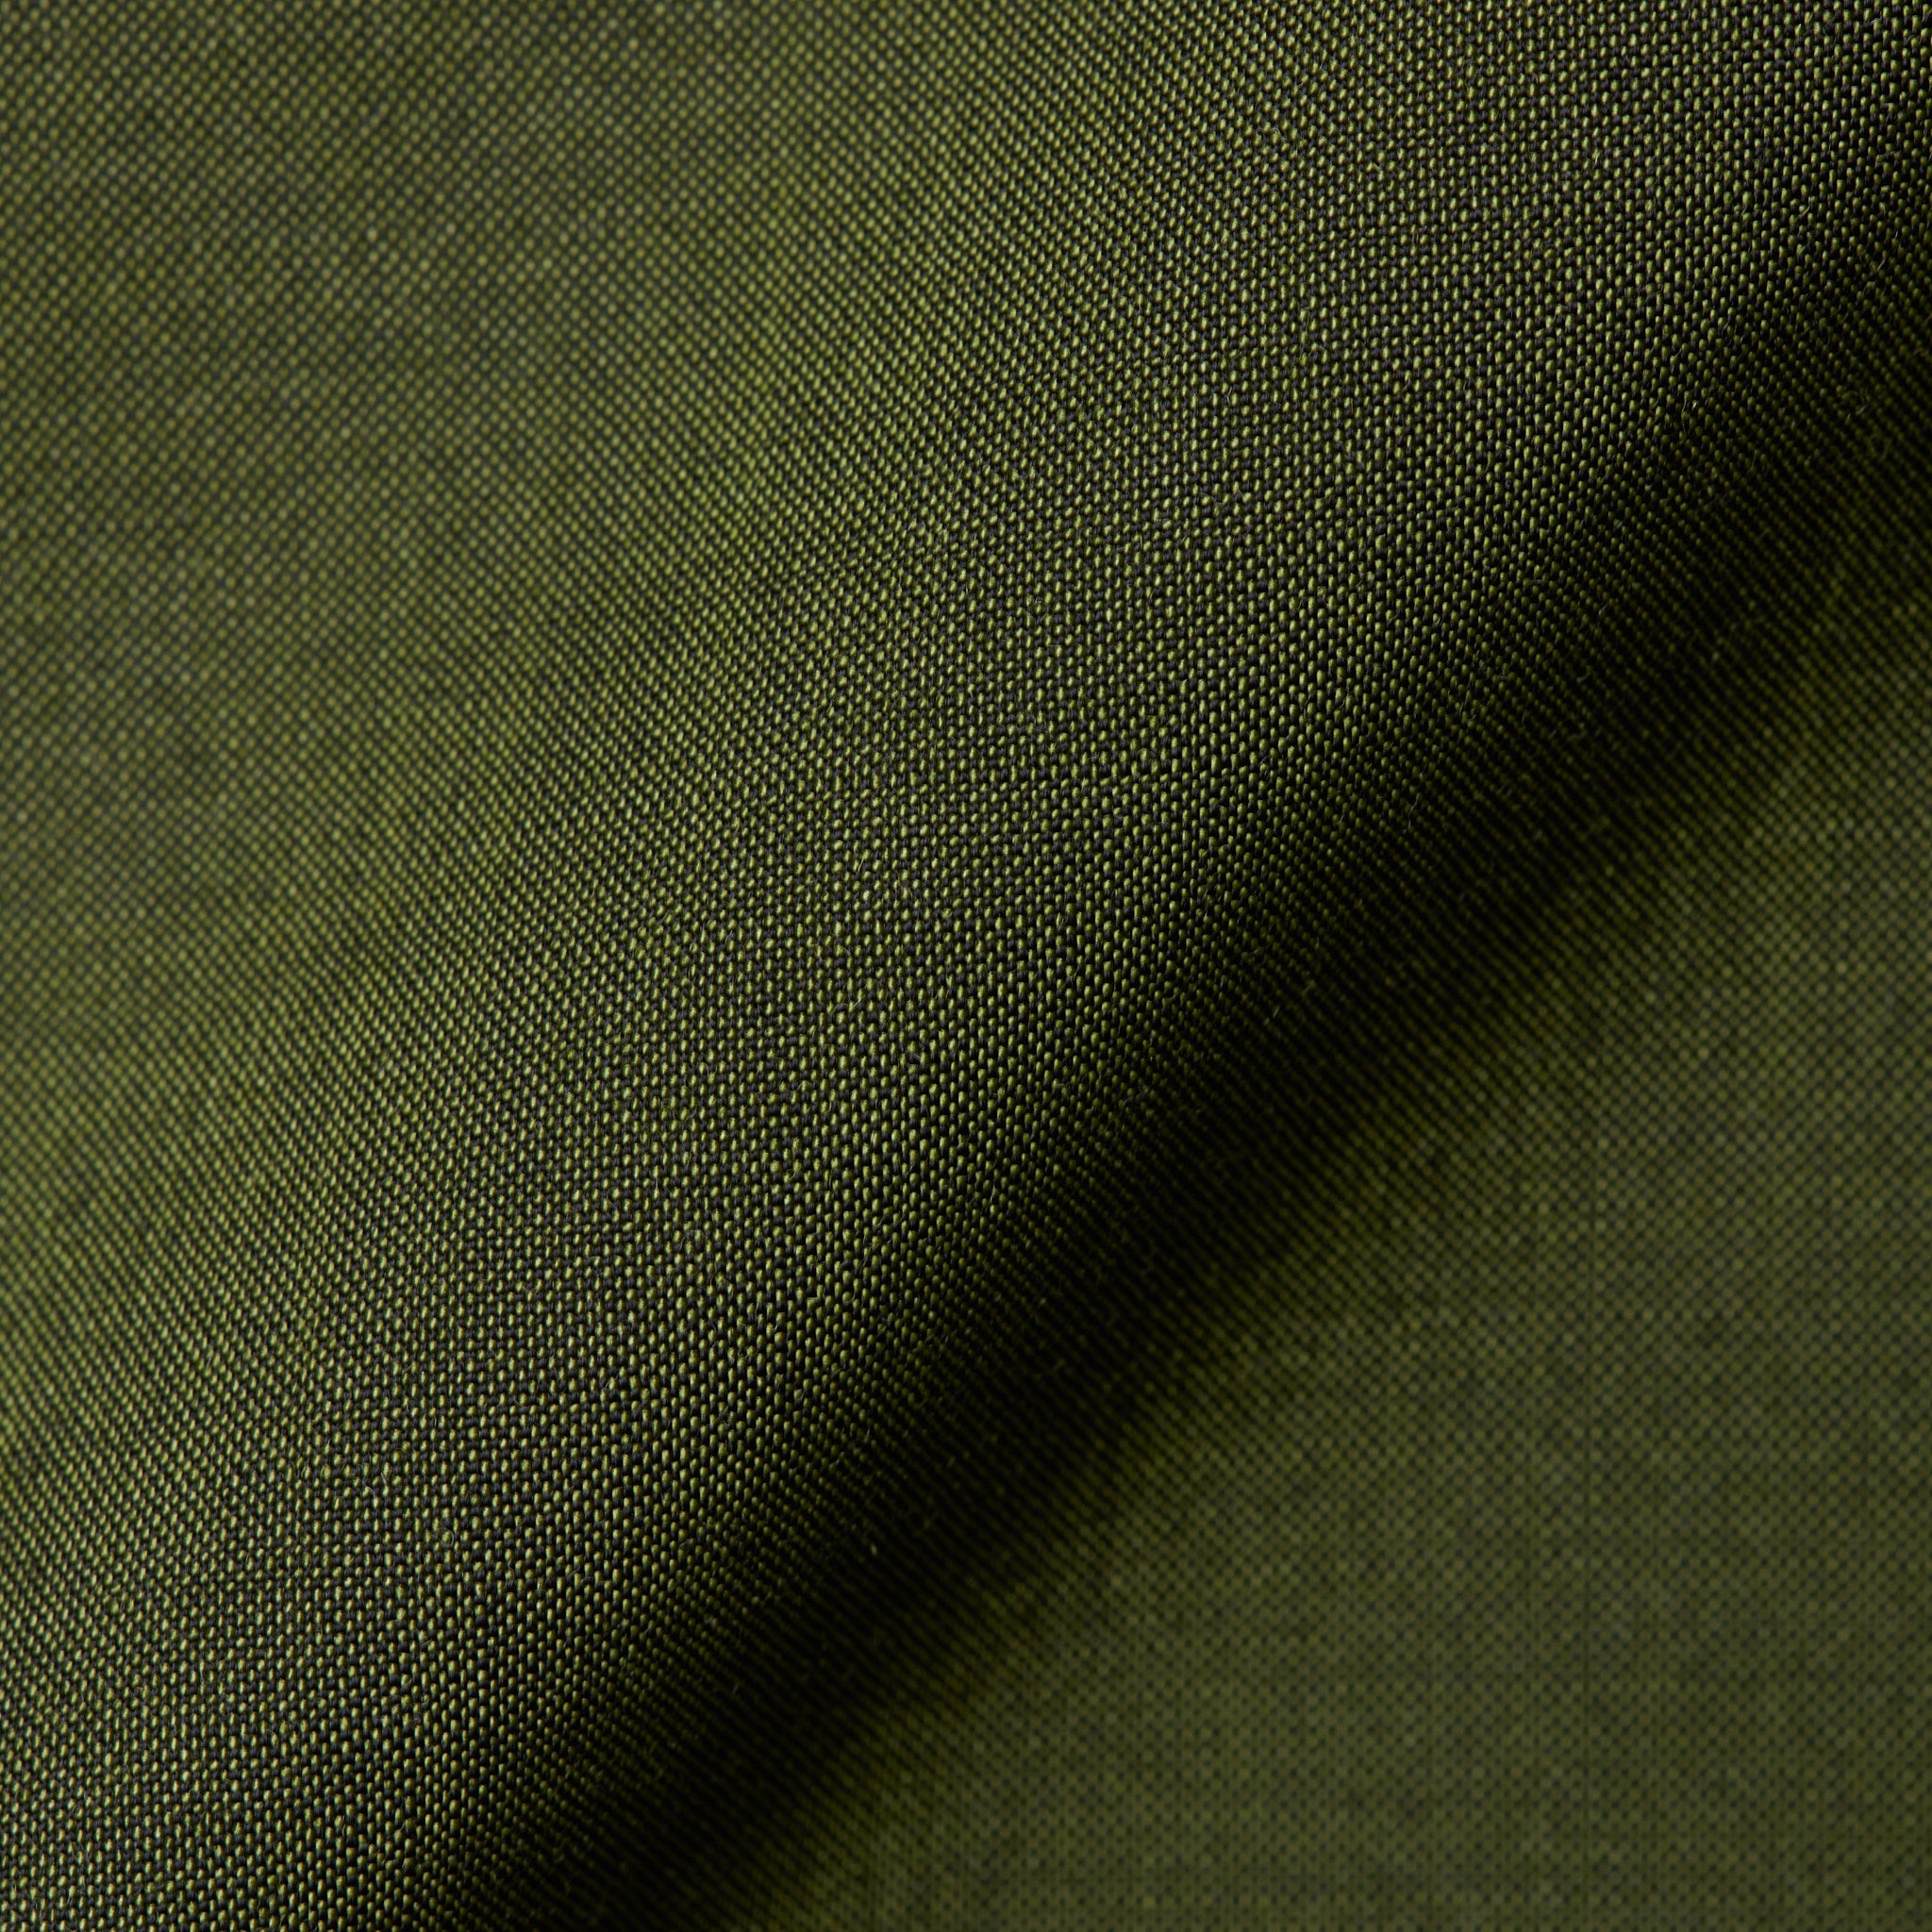 BOGLIOLI Milano "K. Jacket" Green Wool-Mohair Unlined Jacket EU 50 NEW US 40